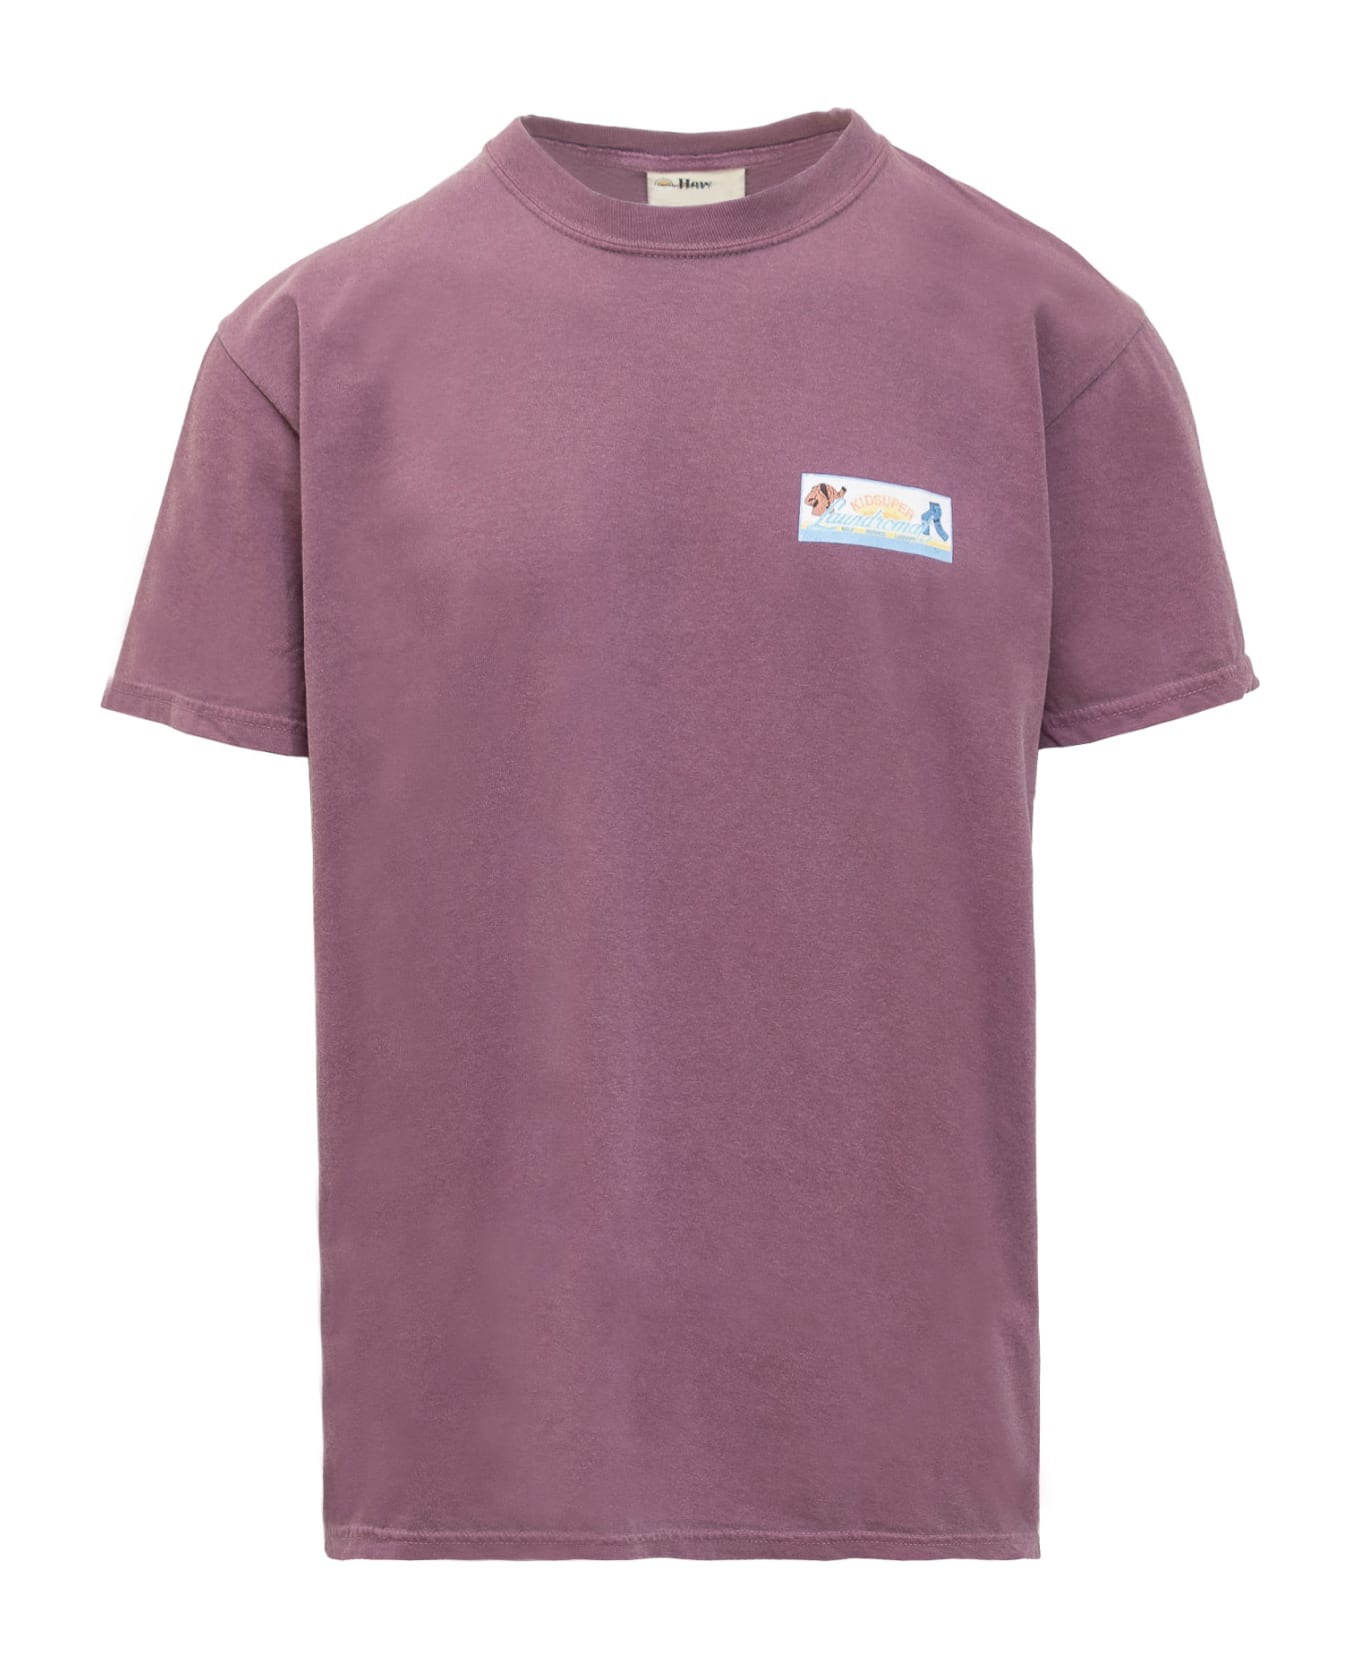 Kidsuper Laundromat T-shirt - PLUM シャツ